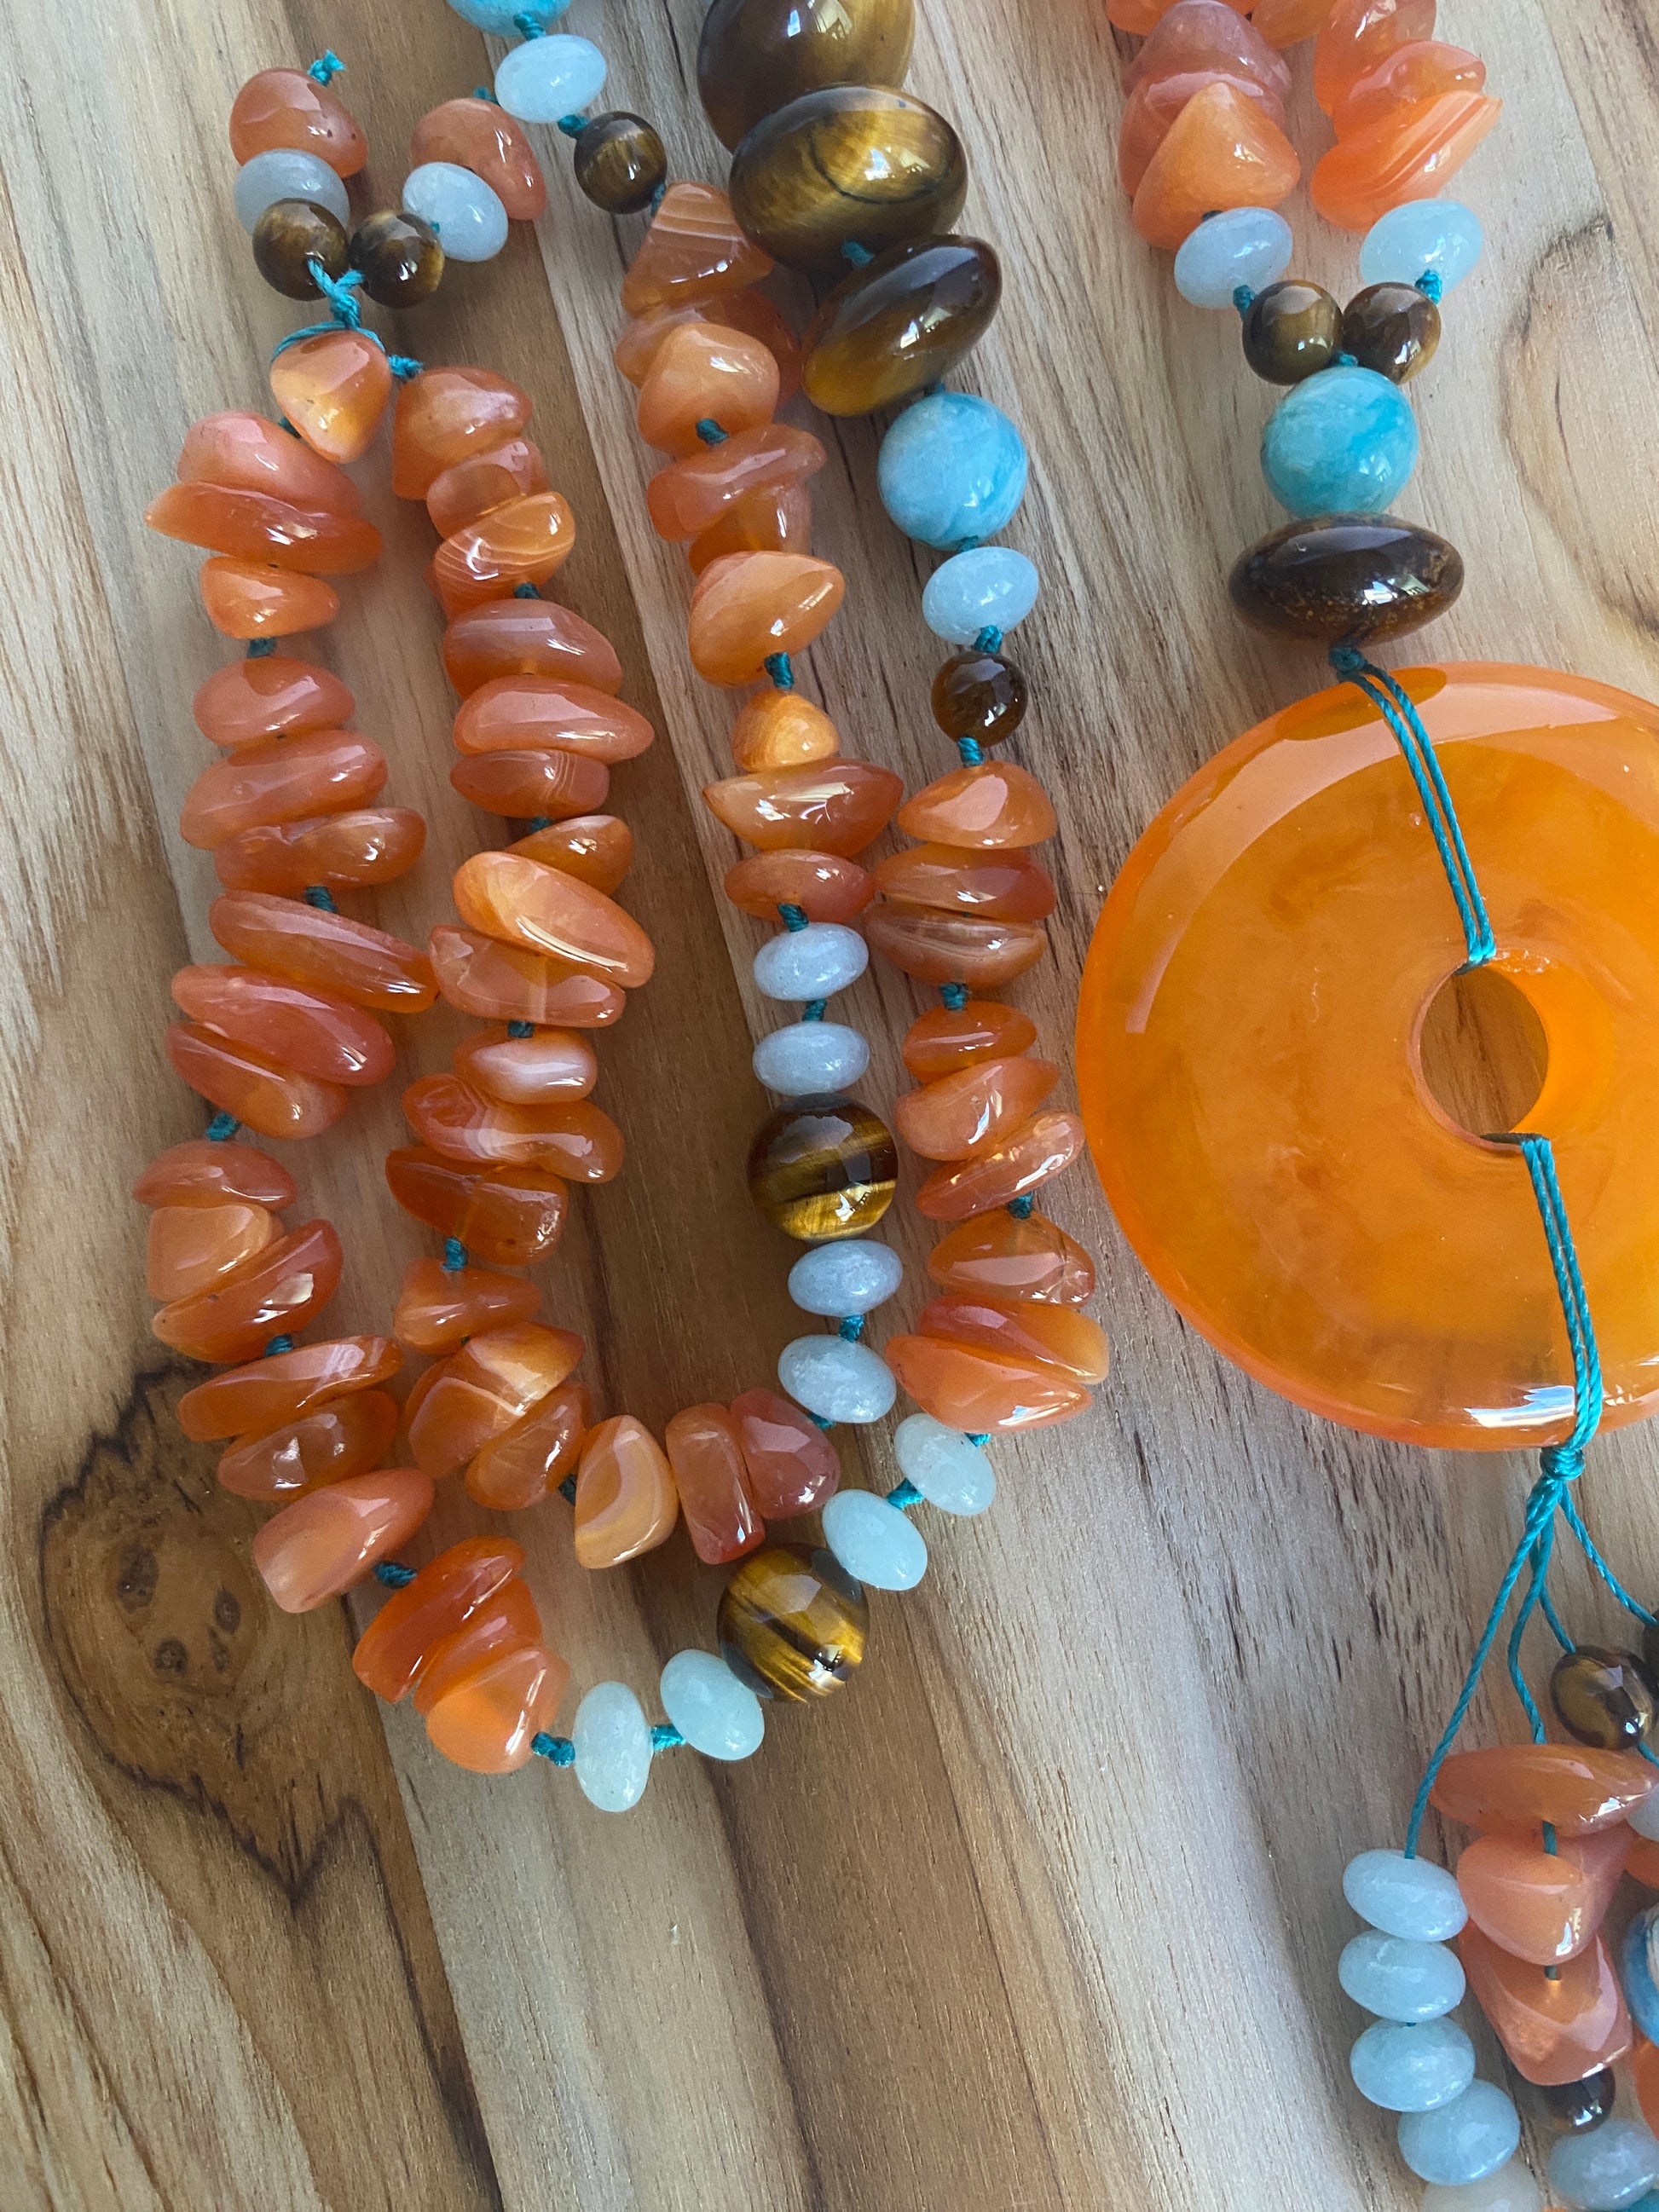 28" Long Large Orange Donut Beaded Necklace with Agate, Quartz & Tiger Eye Beads - My Urban Gems